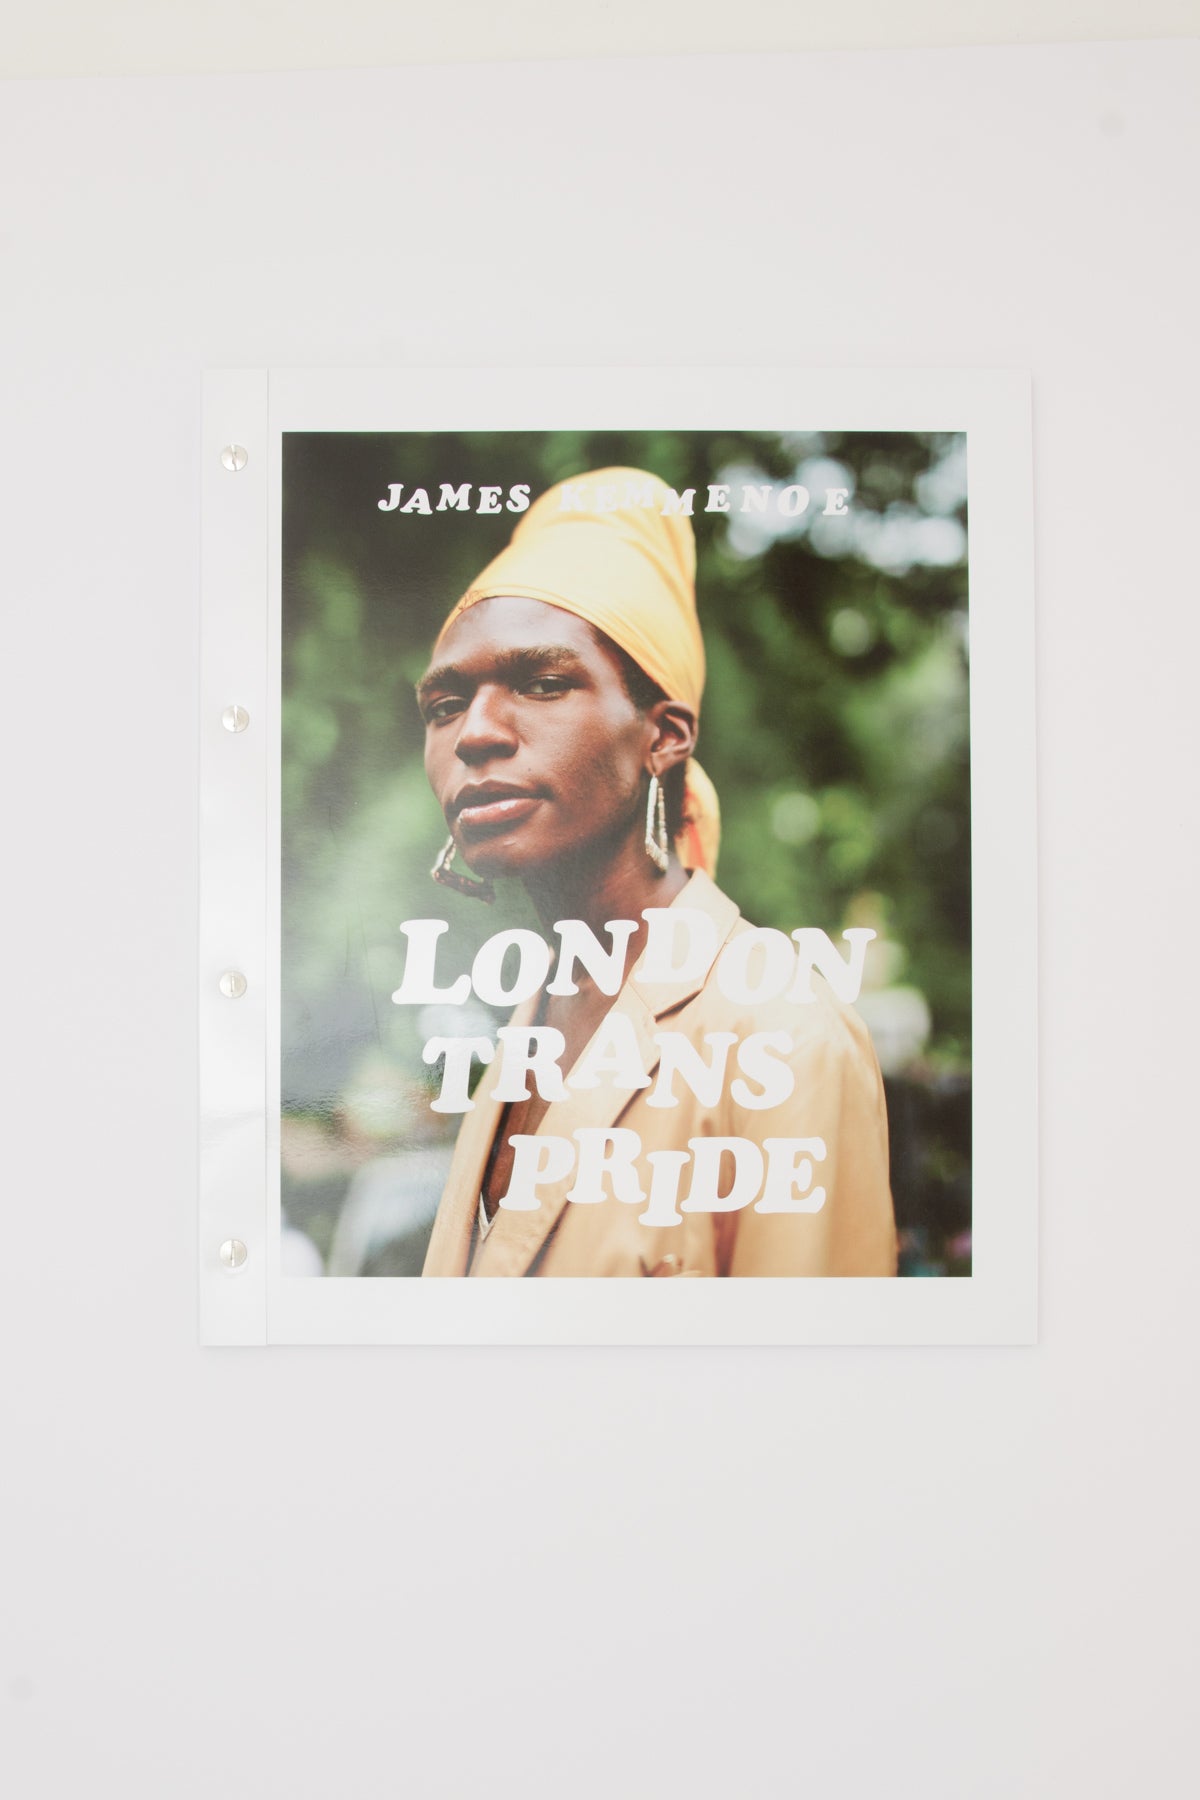 London Trans Pride - James Kemmenoe